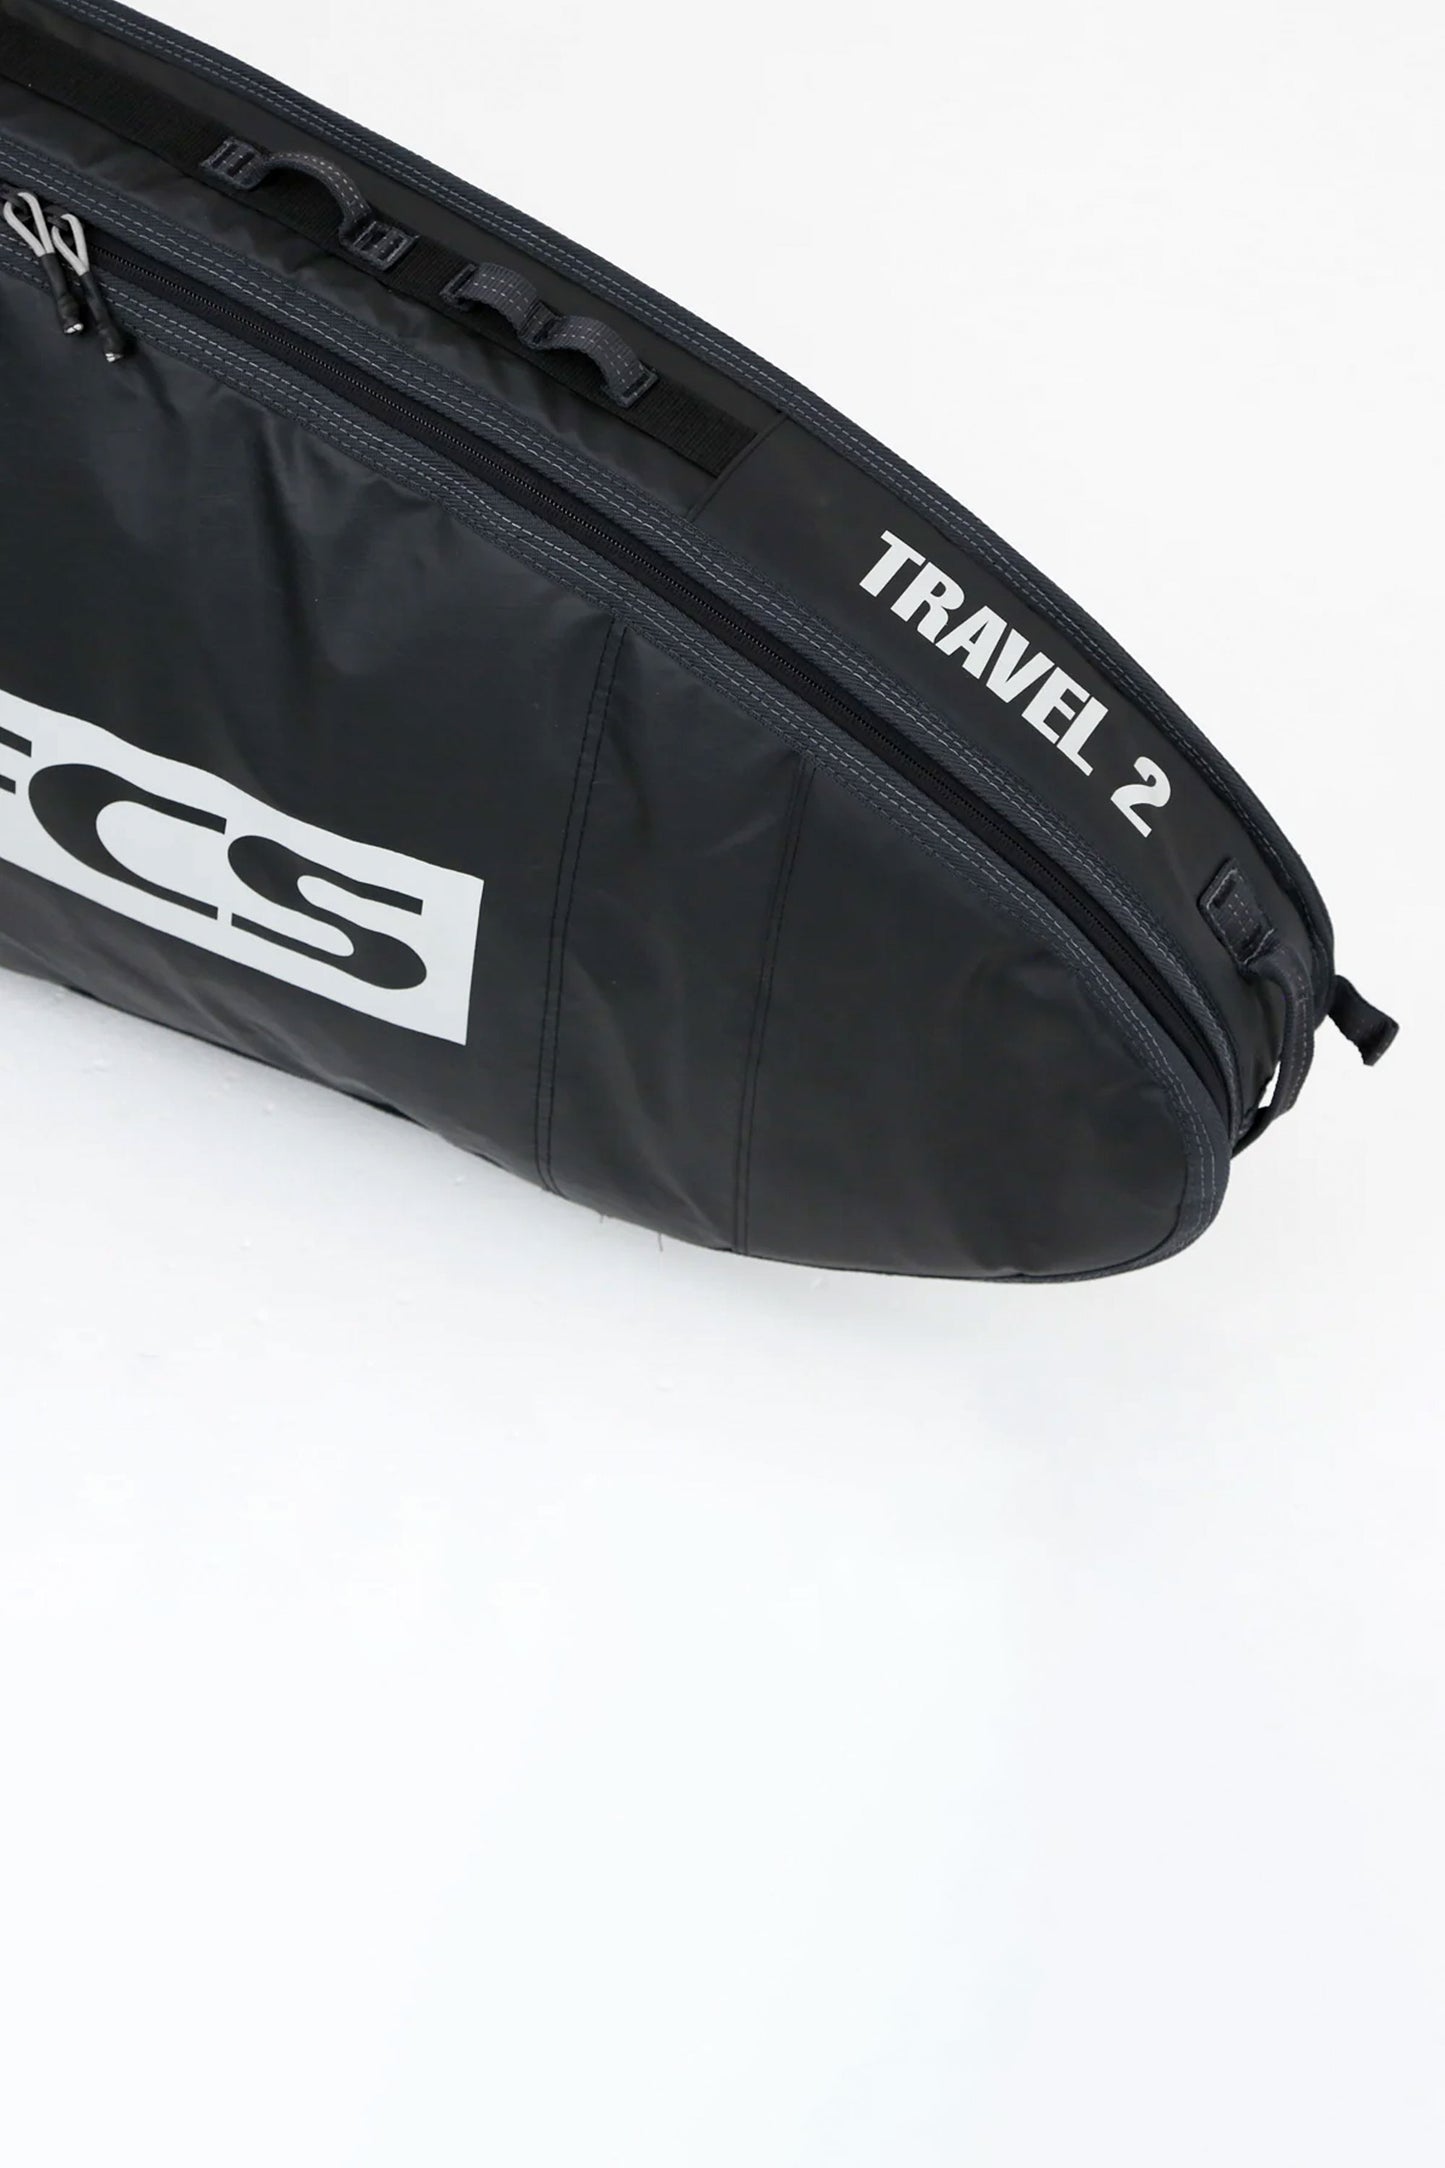 
                  
                    Pukas-Surf-Shop-fcs-travel-boardbag-travel-2-wheelie-longboard-10-2
                  
                